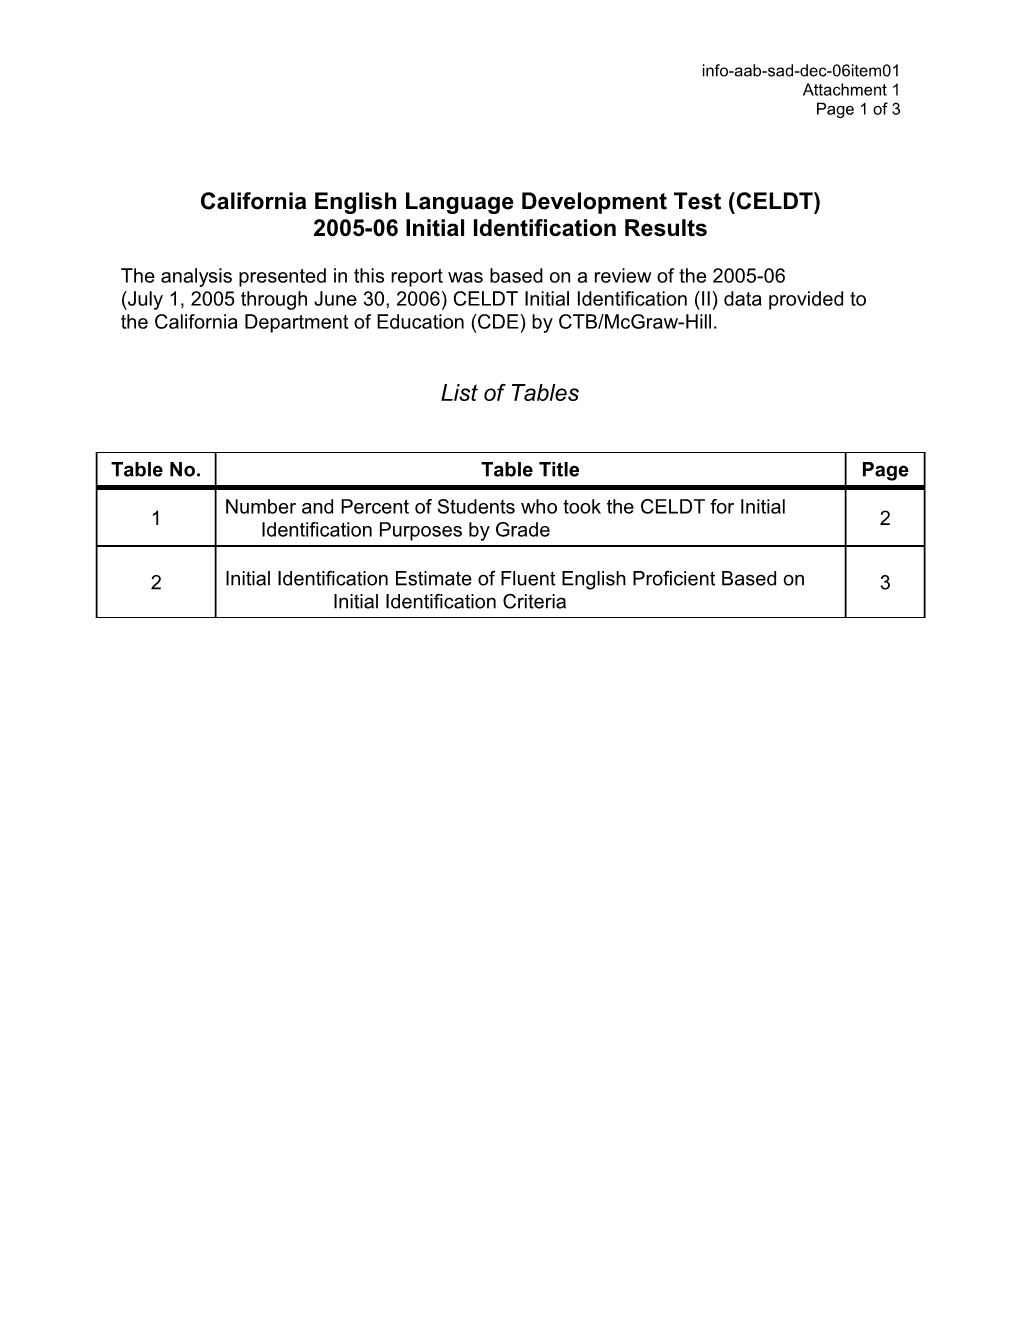 December 2006 SAD Item 01 Attachment 1 - Information Memorandum (CA State Board of Education)